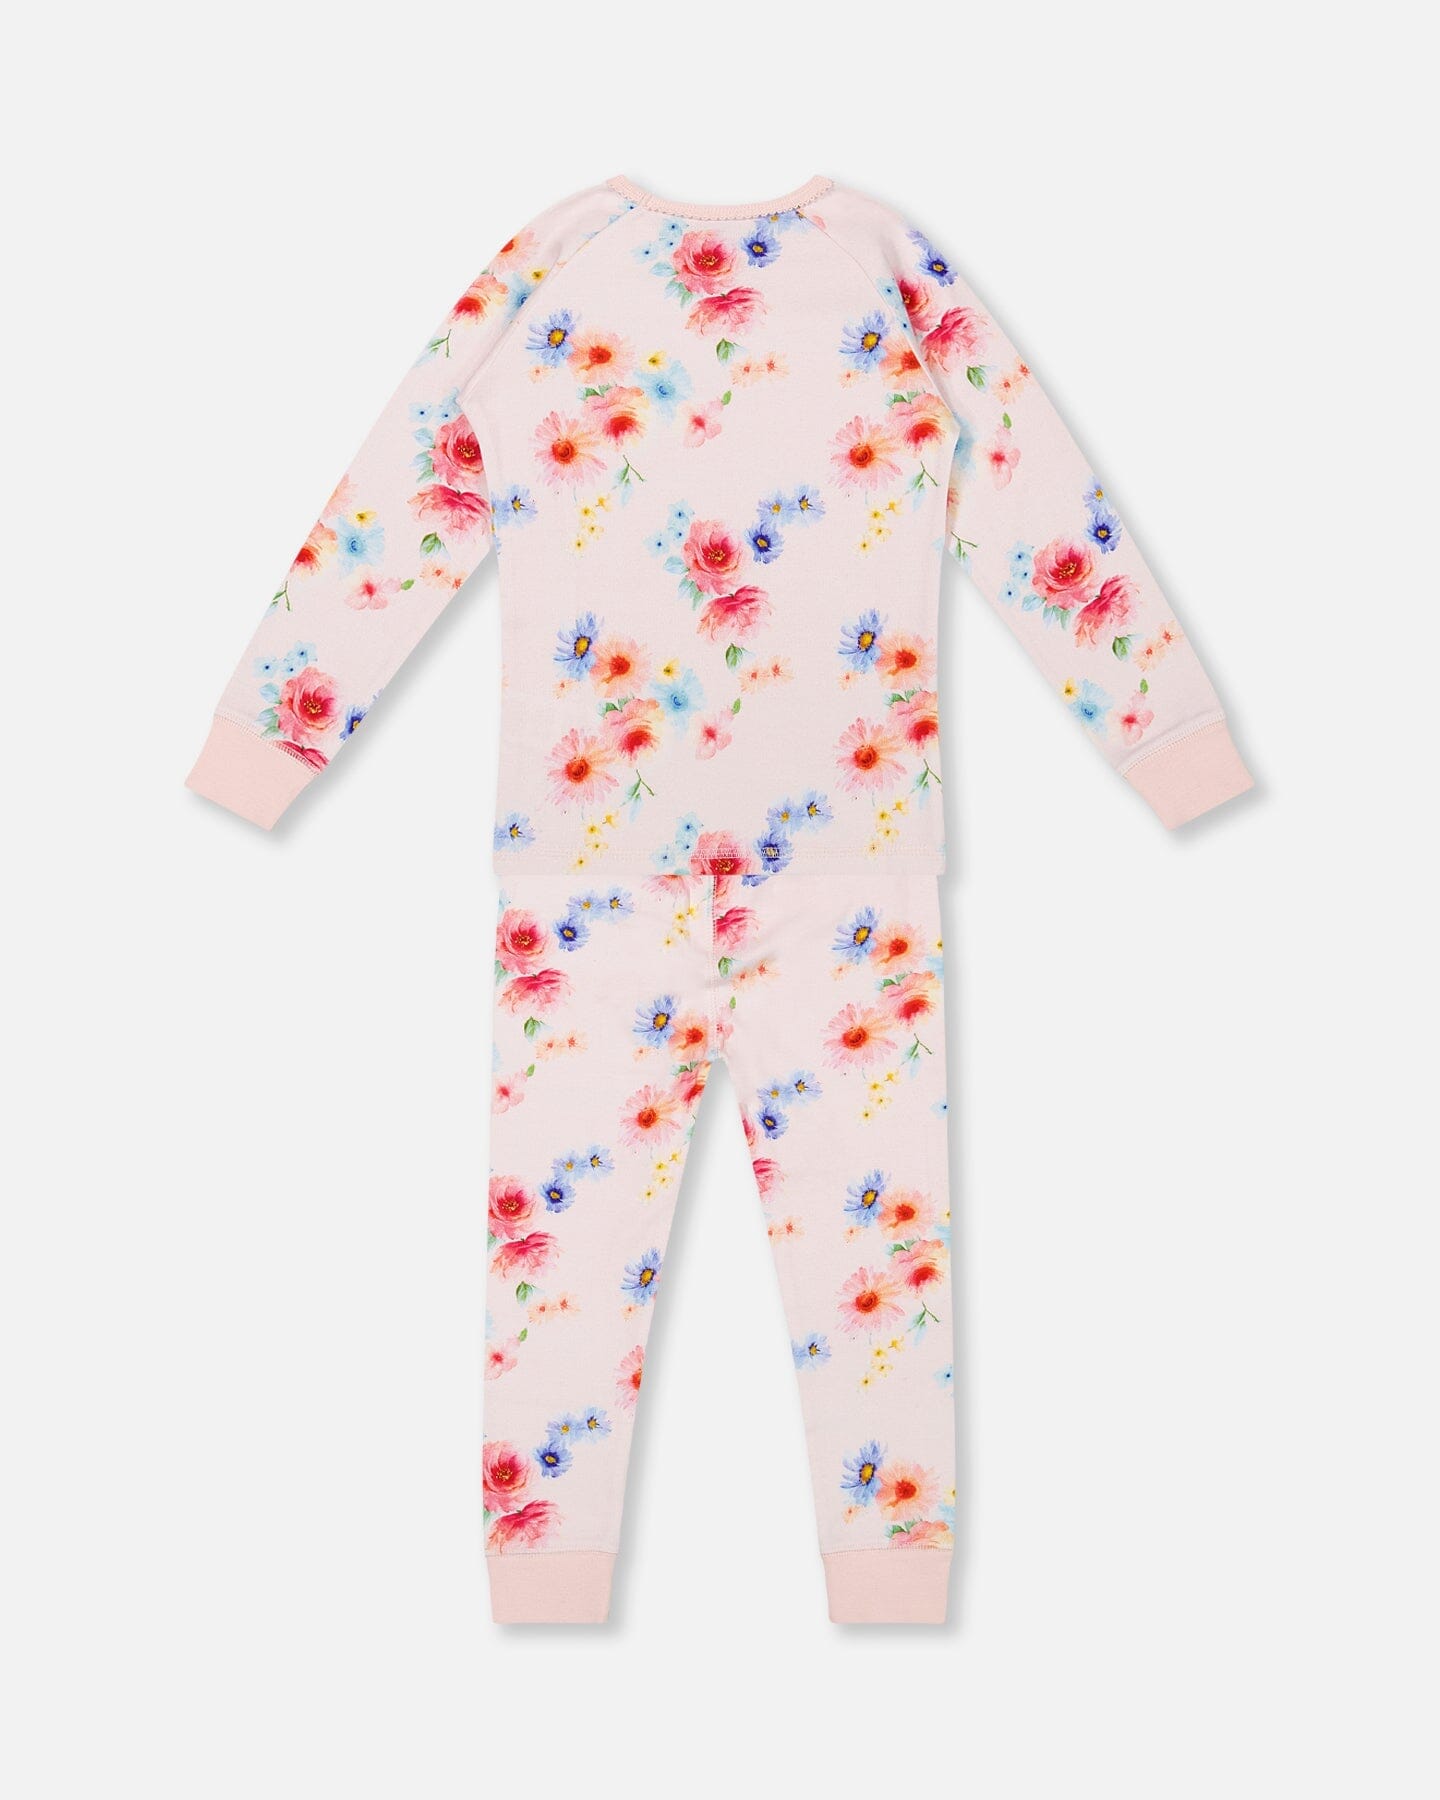 Organic Cotton Long Sleeve Two Piece Women Pajama Light Pink Printed Flowers - F30PG16_072